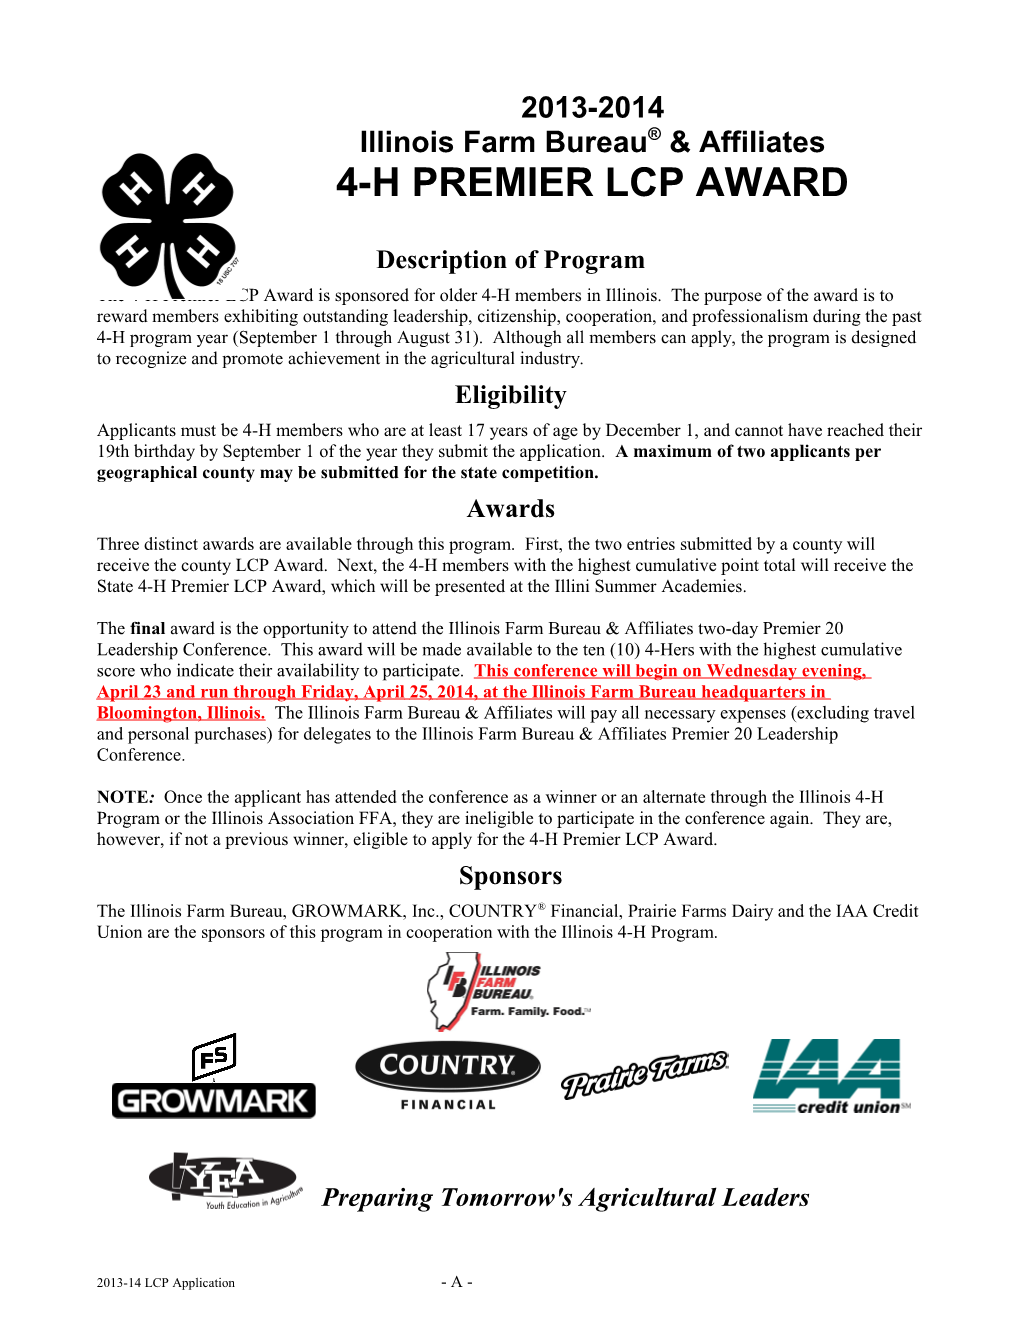 2001-02 IFB & Affiliates 4-H Premier LCP AWARD PROGRAM Template